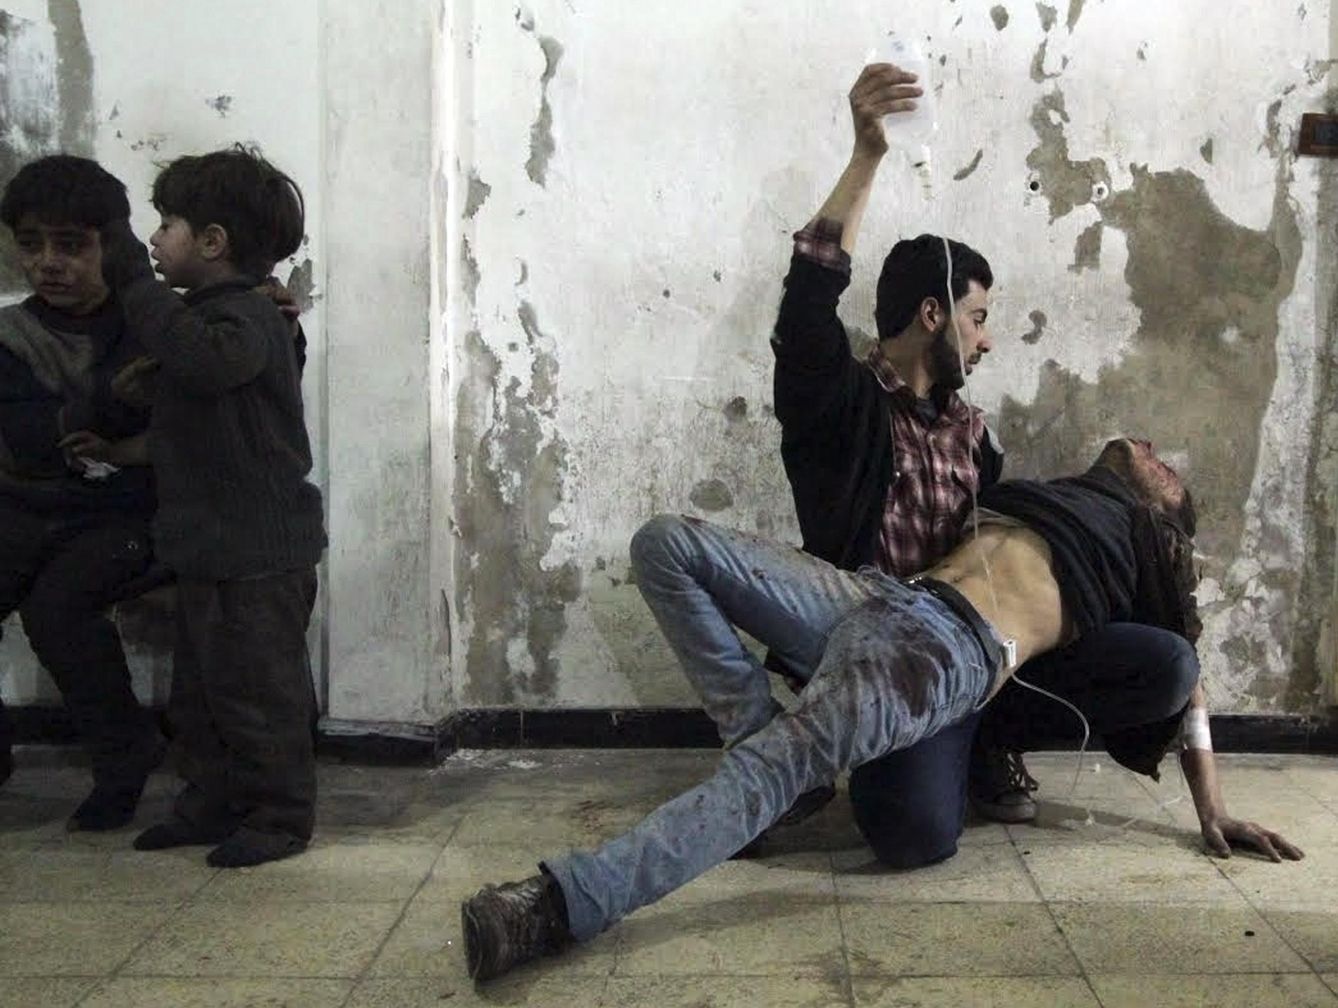 Un hombre da asistencia médica a un herido en un bombardeo del régimen mientras dos niños esperan a ser atendidos en Damasco. (Reuters)